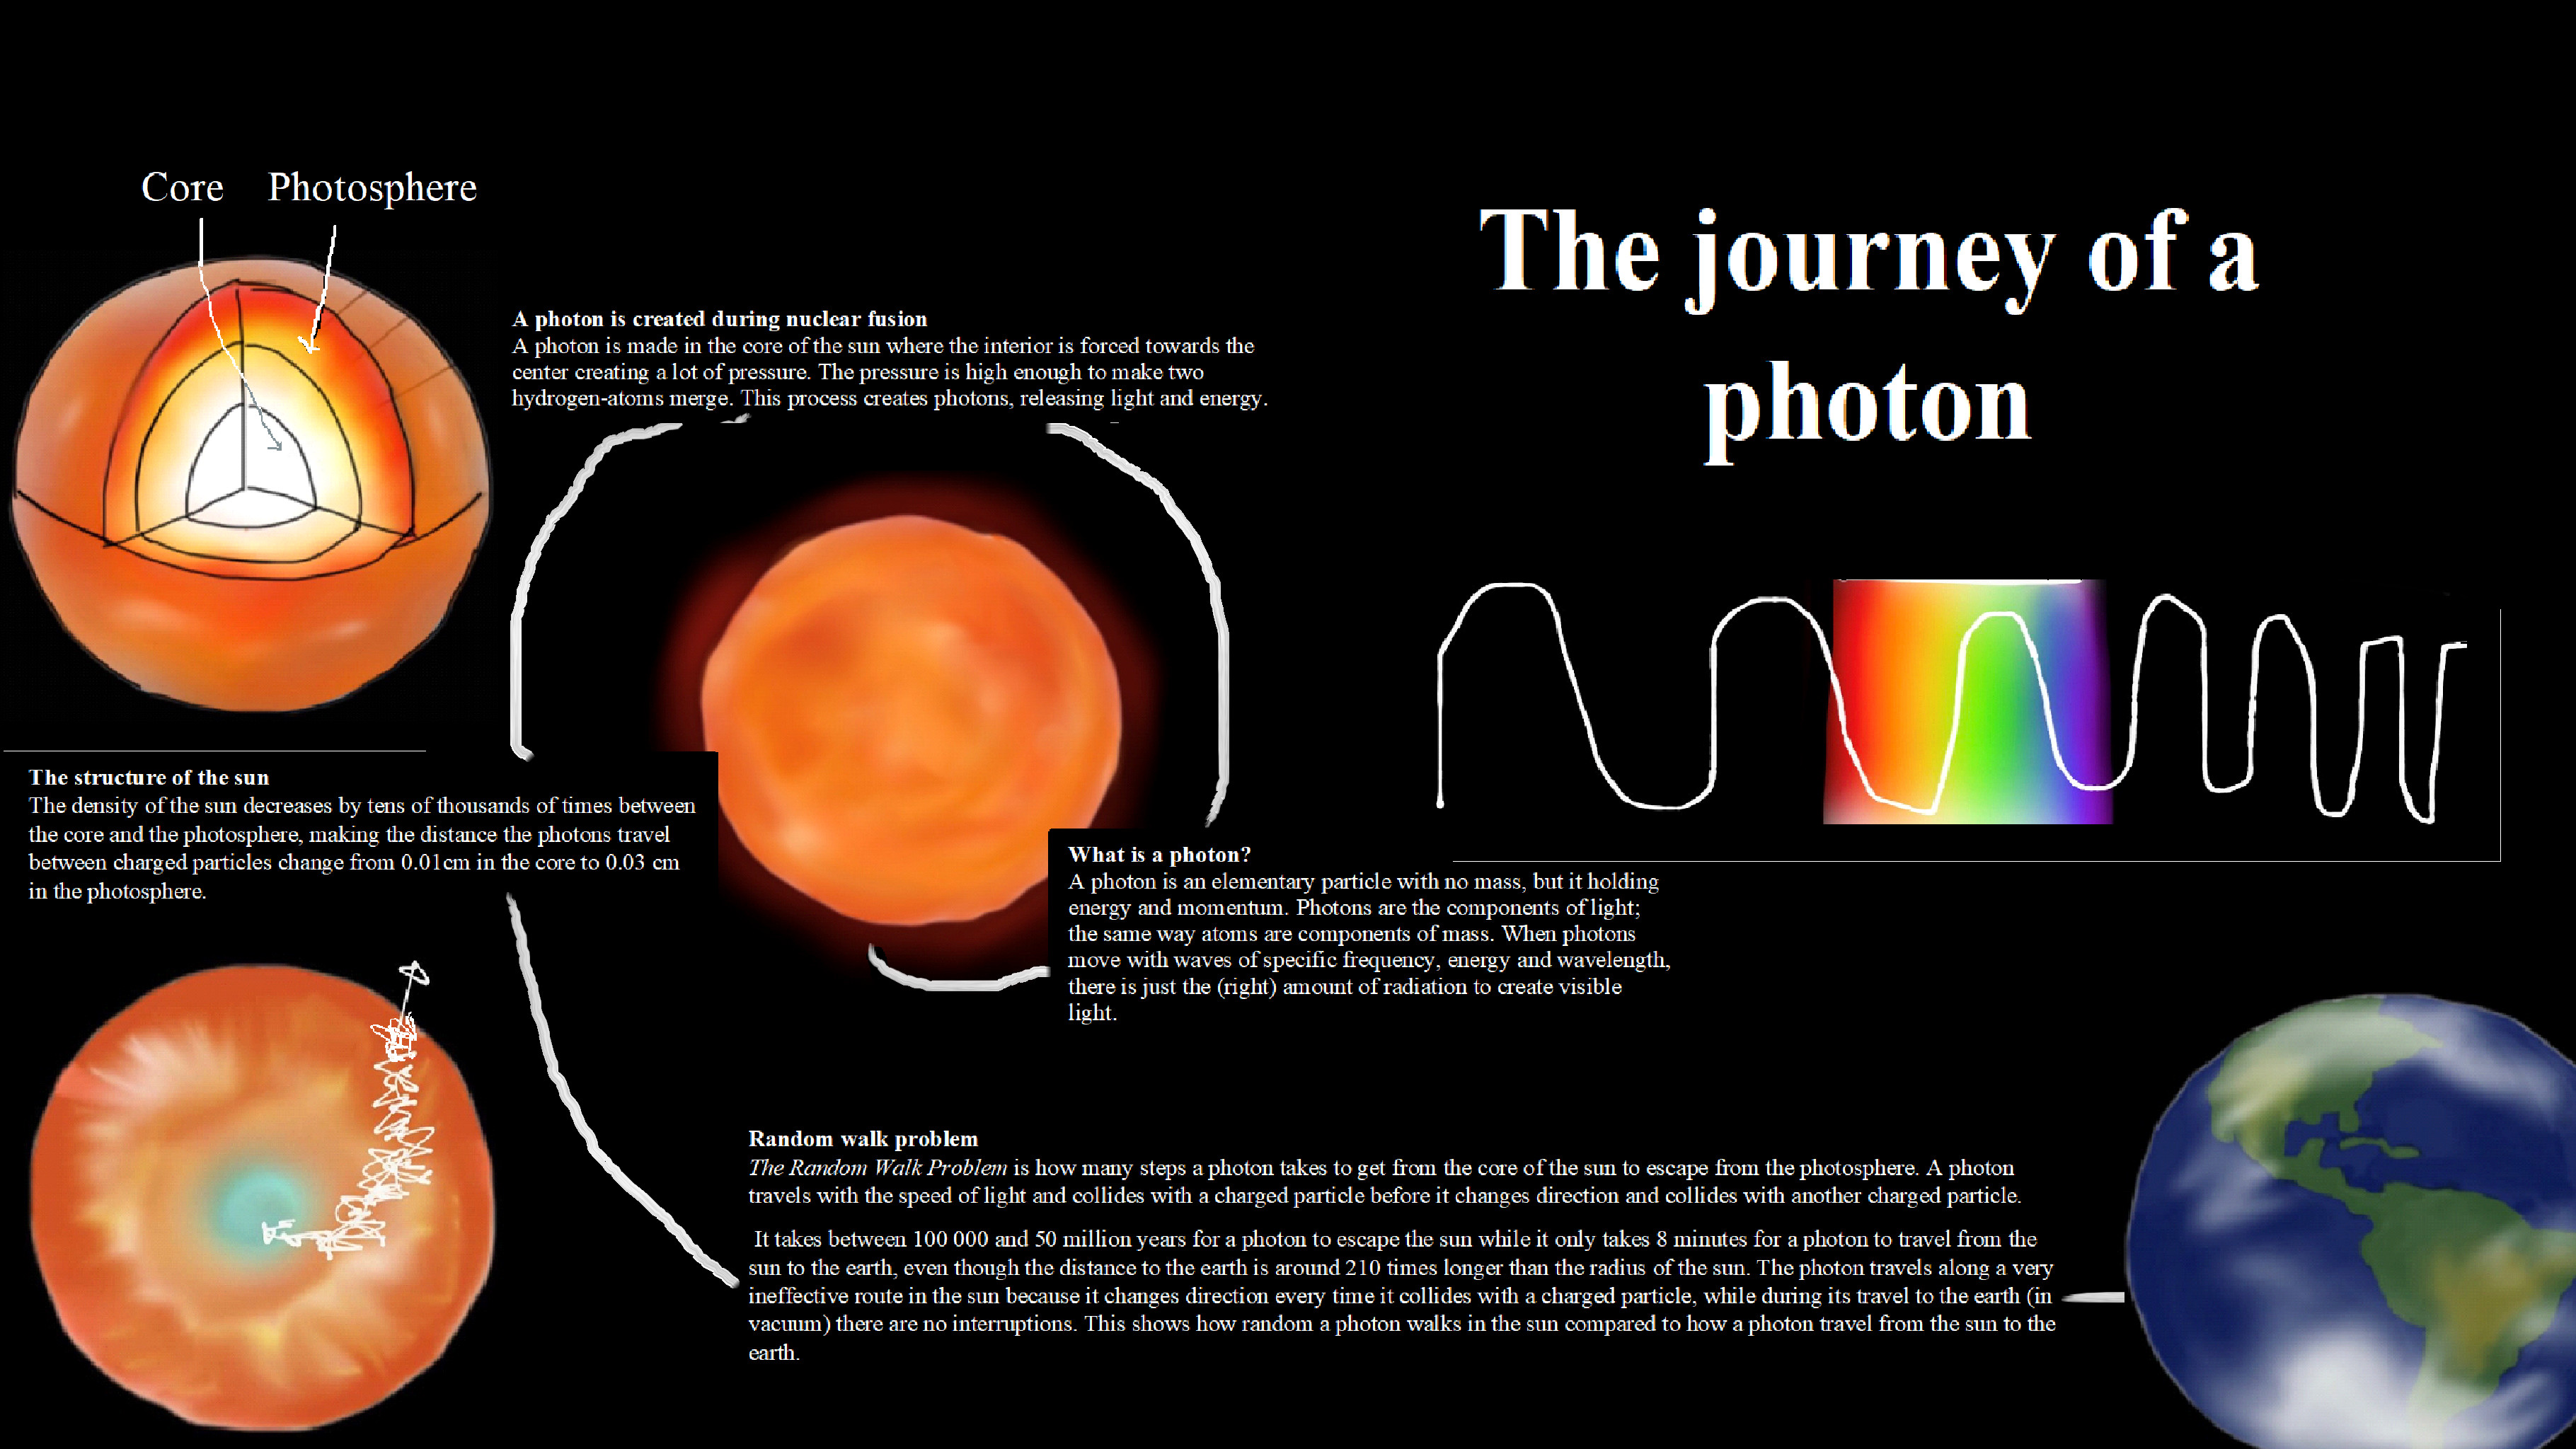 photon travel through space